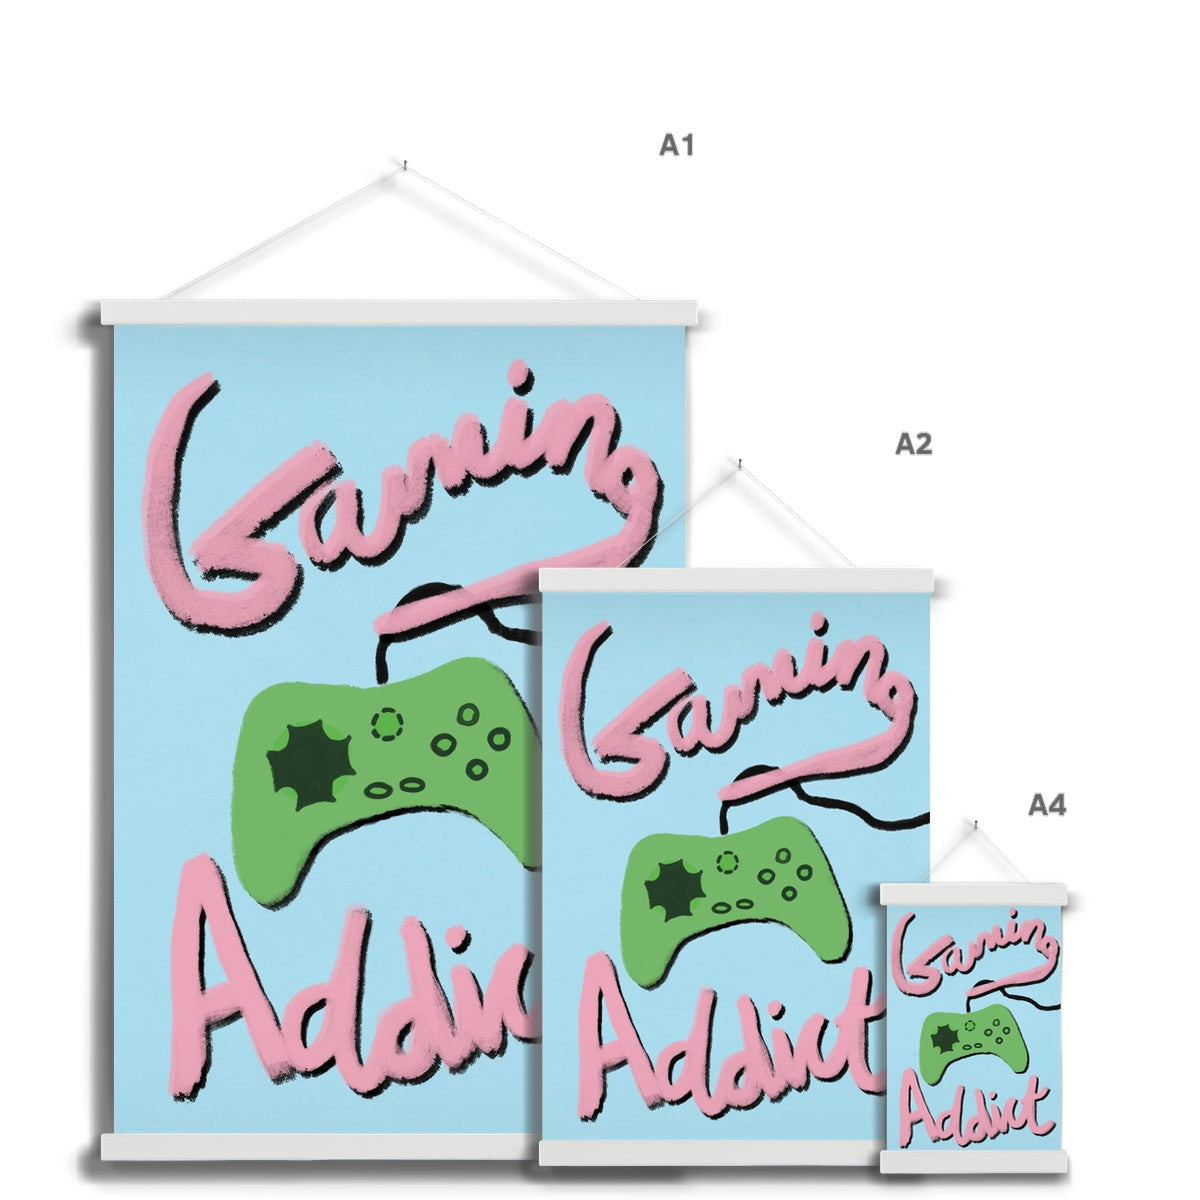 Gaming Addict Print - Light Blue, Pink, Green Fine Art Print with Hanger